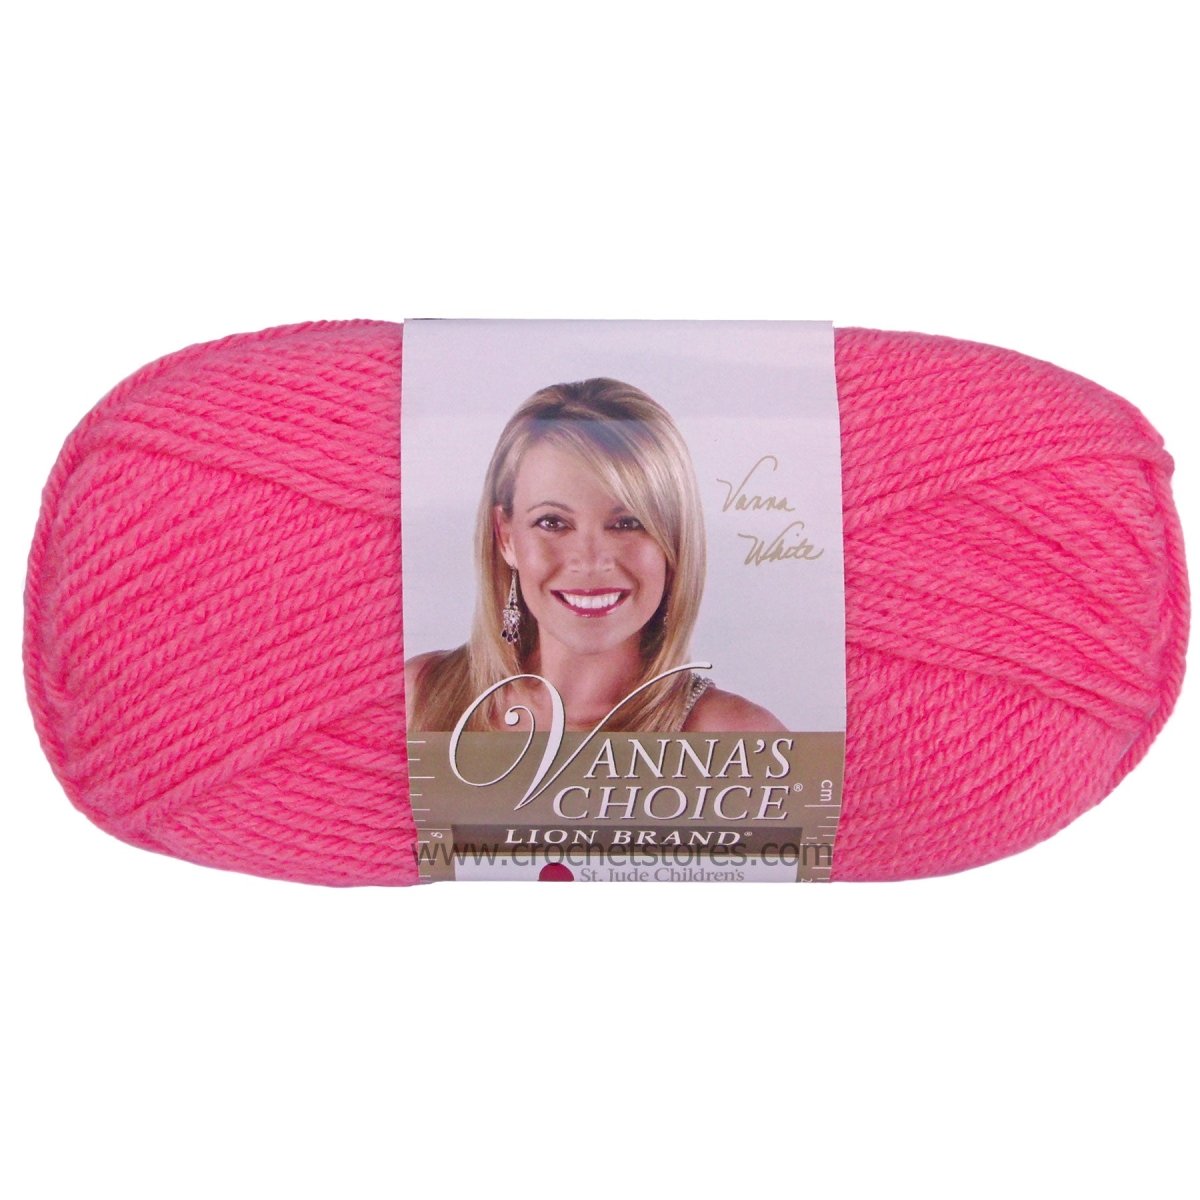 VANNAS CHOICE - Crochetstores860-104